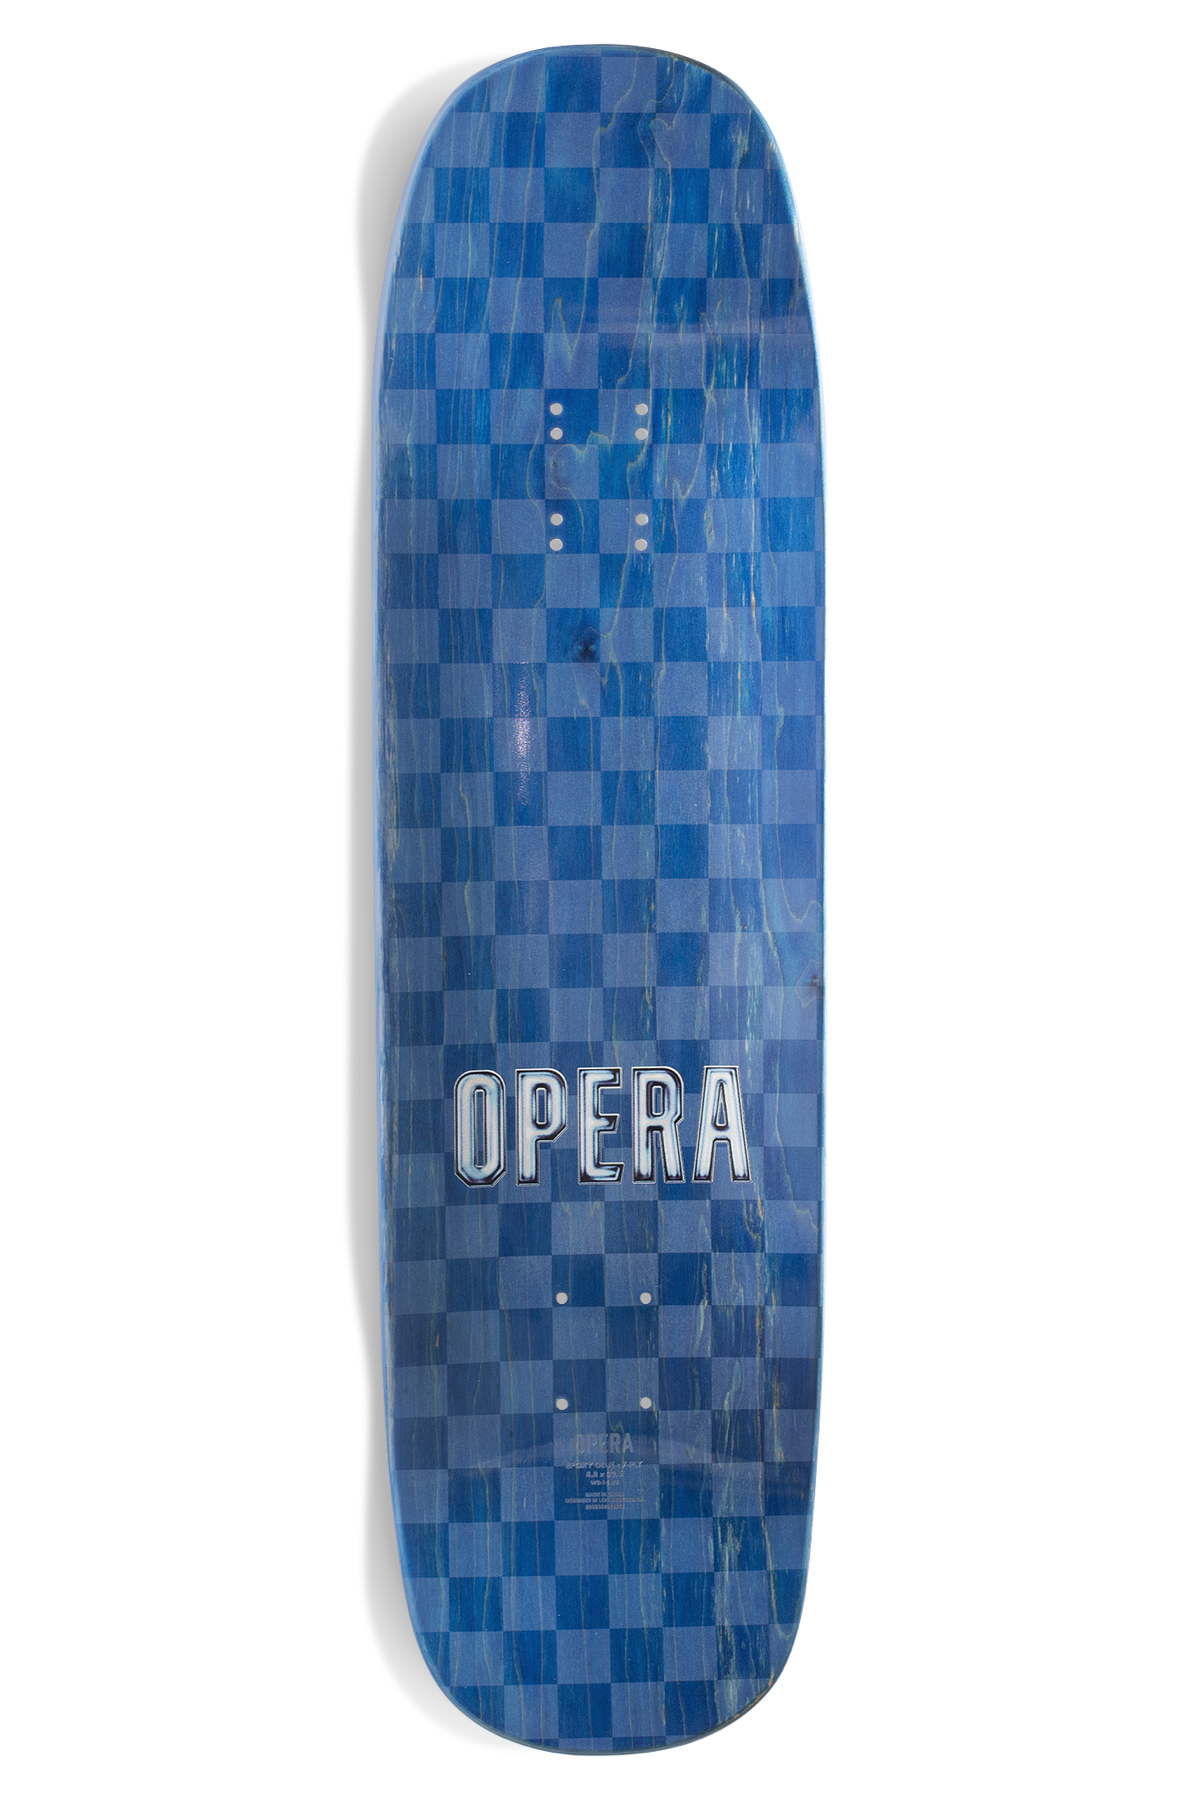 Opera Sam Beckett Dover Ex7 Skateboard Deck - 8.75"